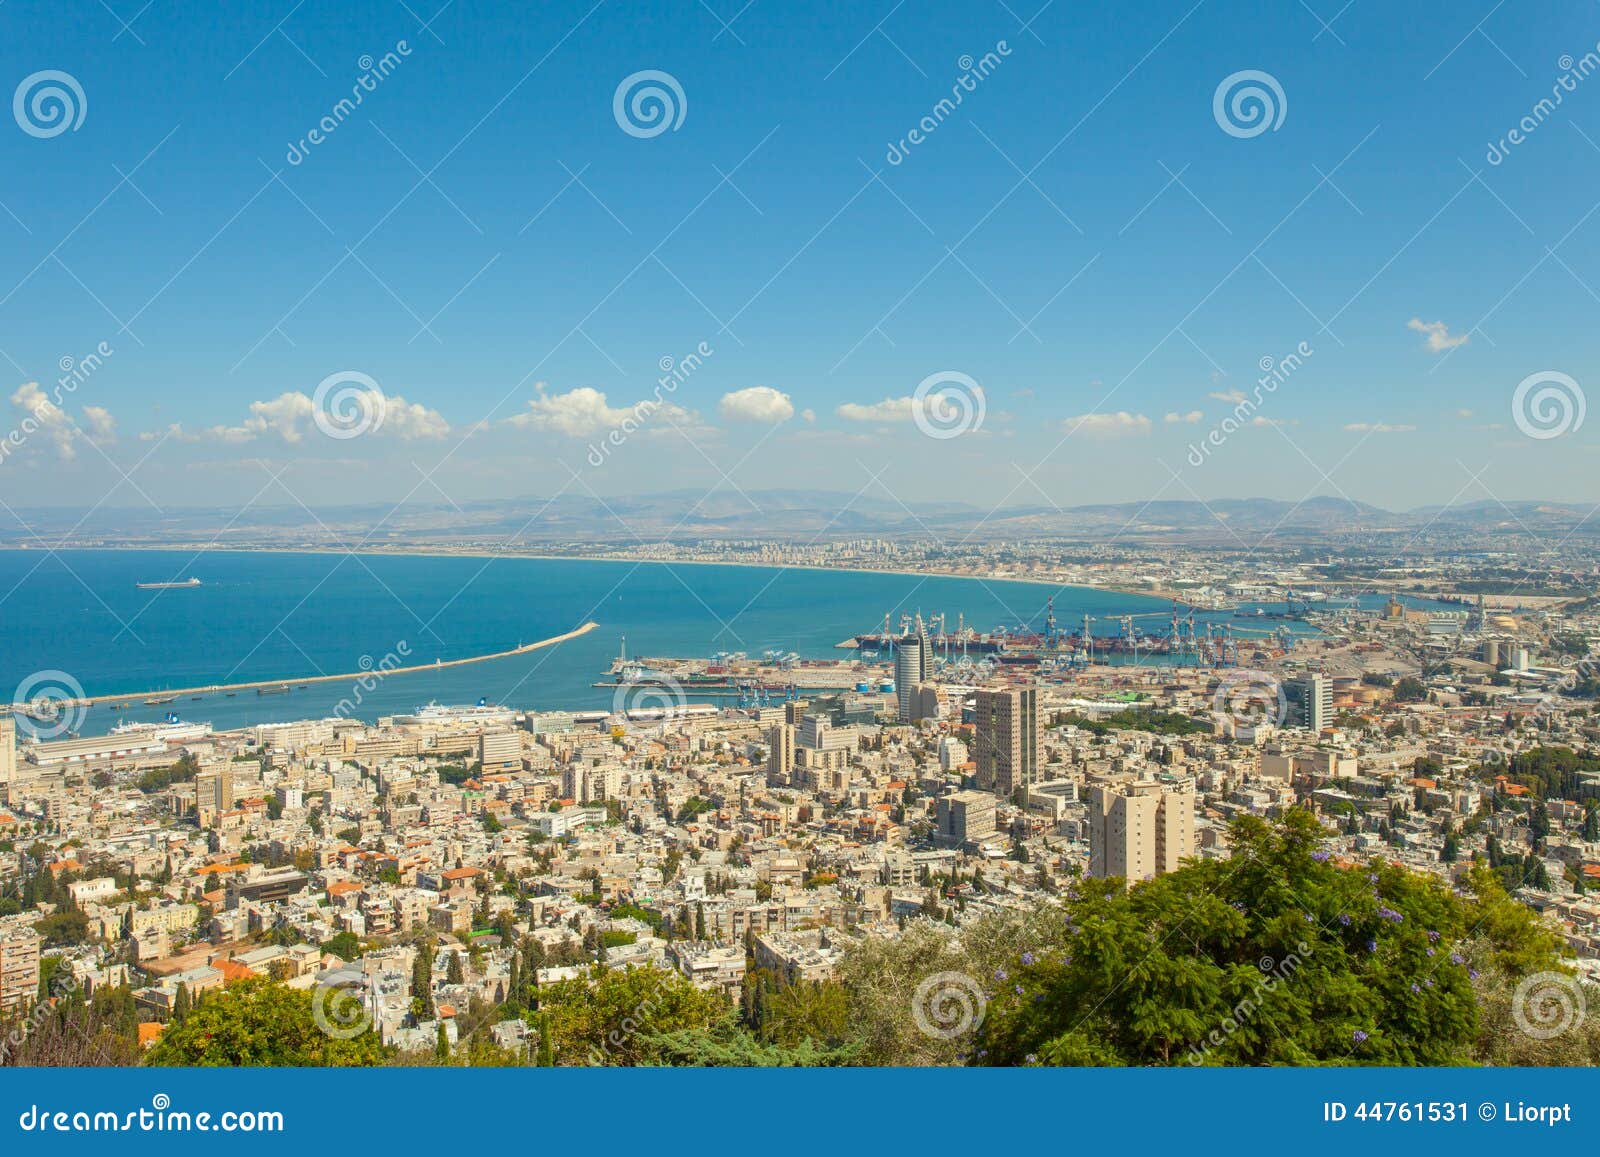 以色列海法 免费图片 - Public Domain Pictures